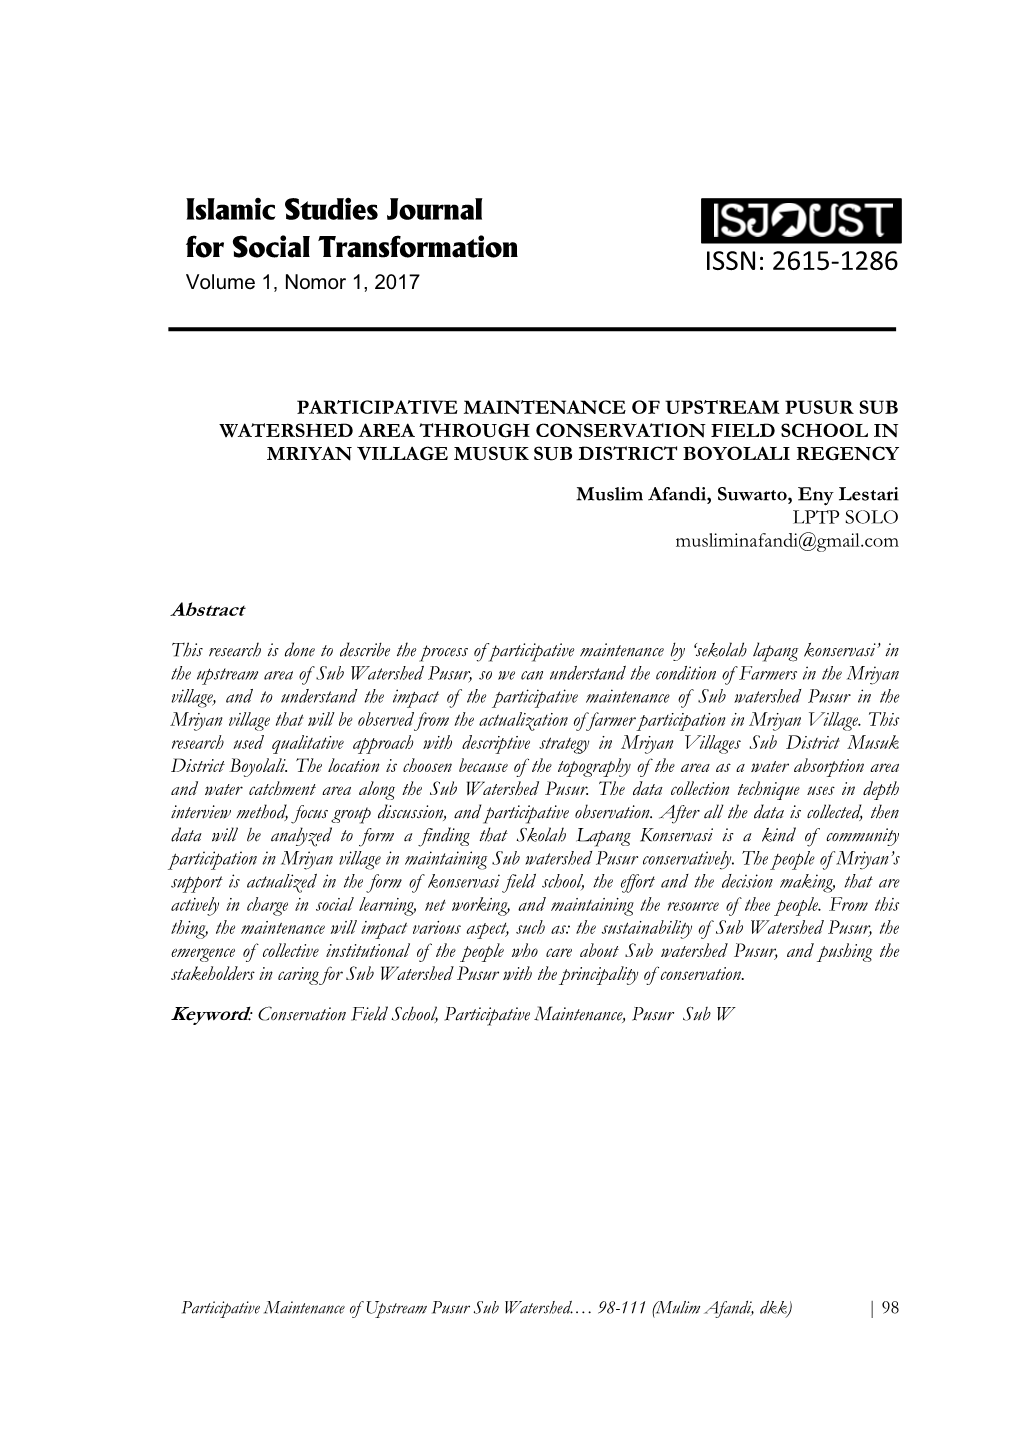 Islamic Studies Journal for Social Transformation ISSN: 2615-1286